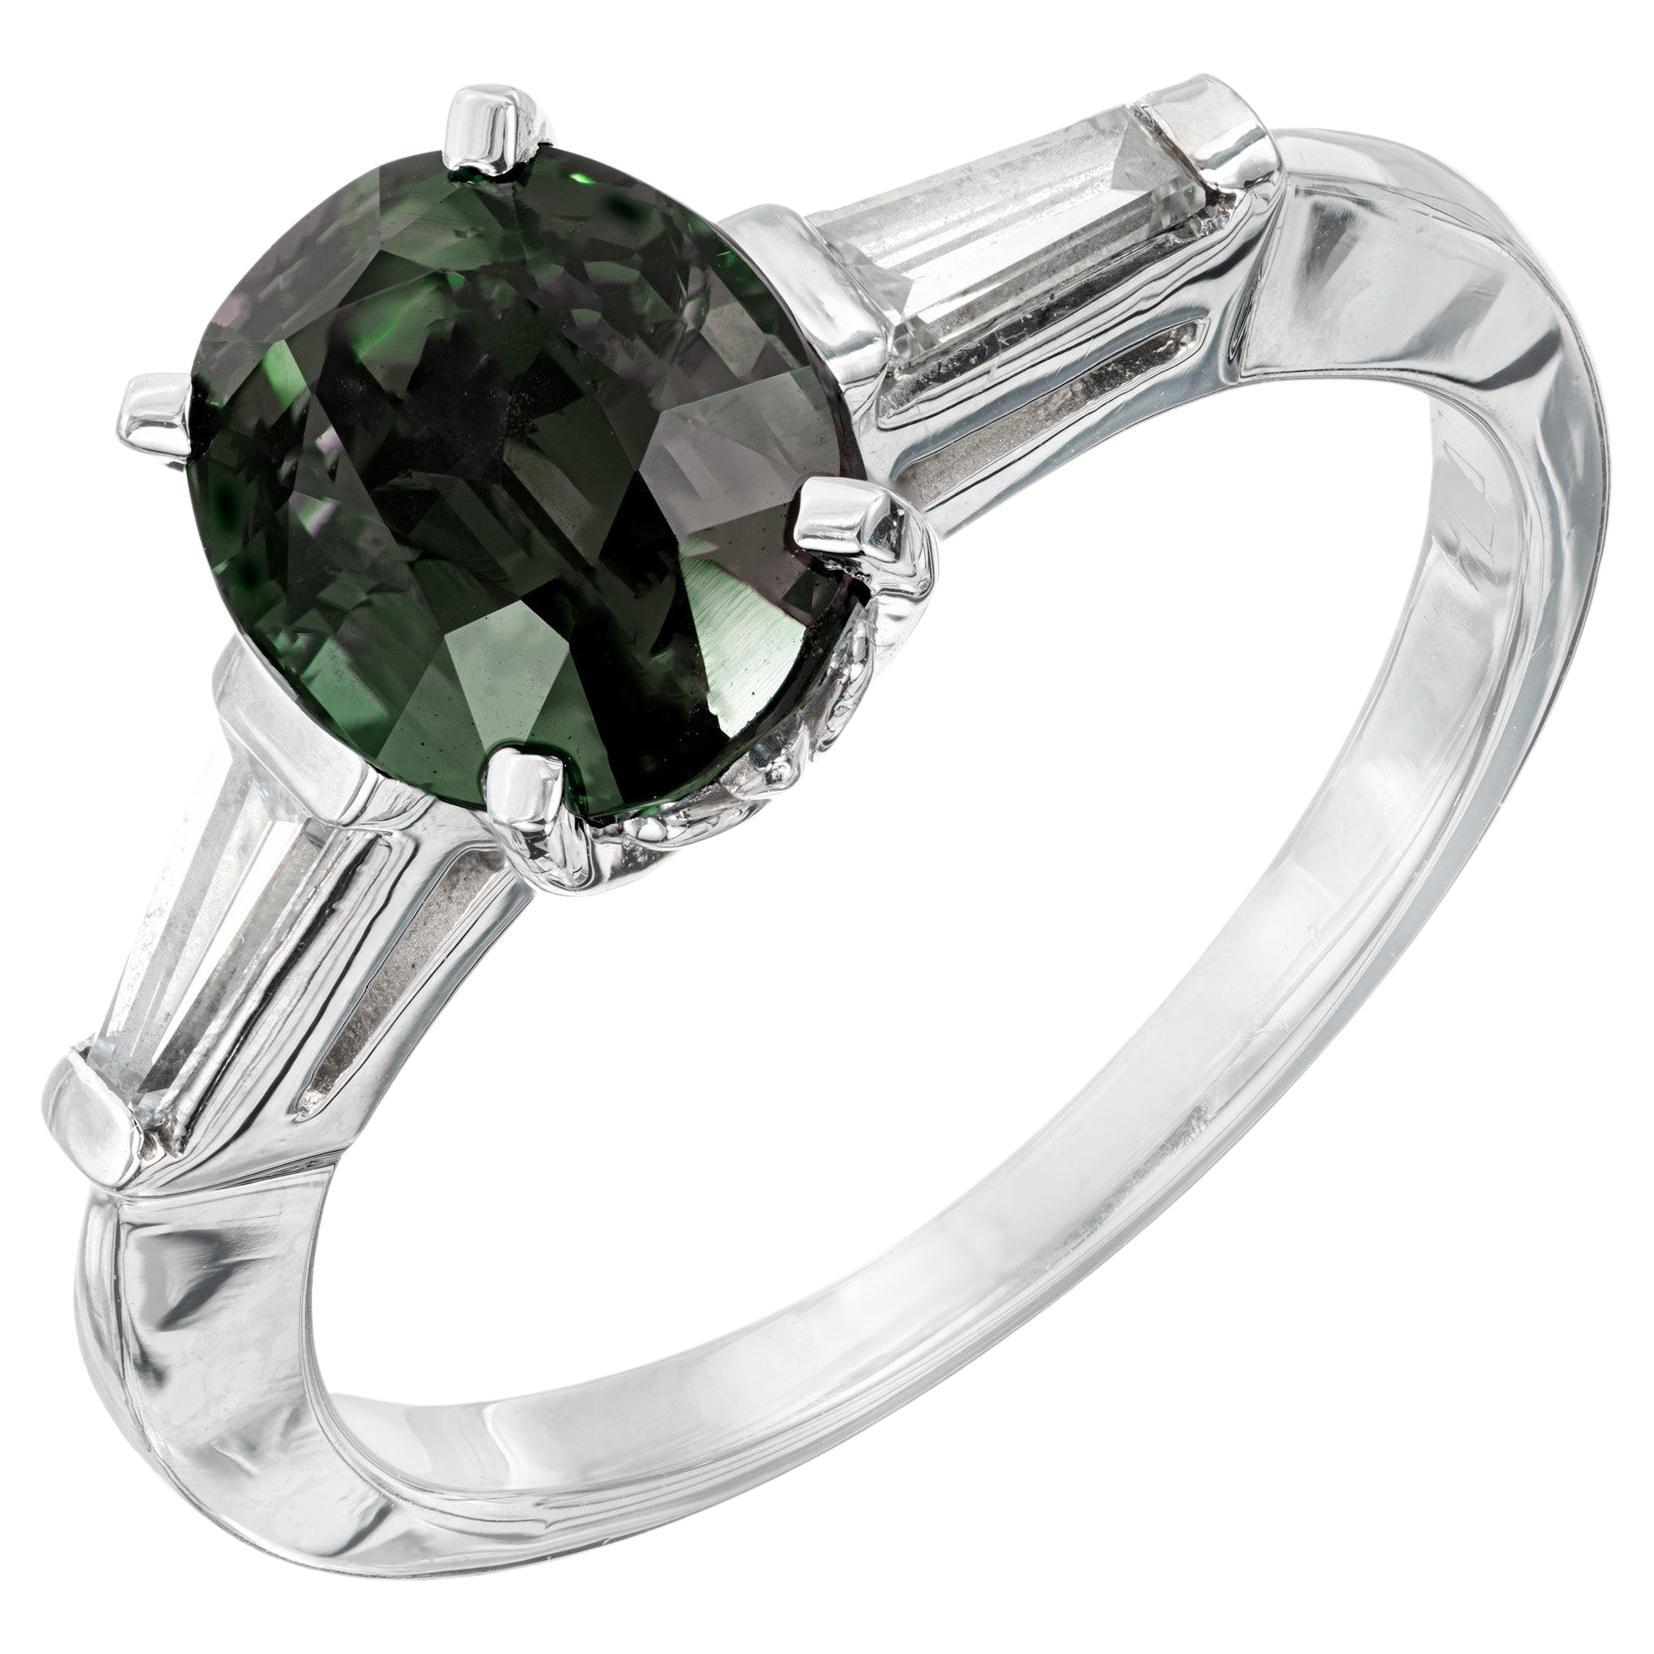 Peter Suchy GIA Certified 2.59 Carat Green Sapphire Diamond Platinum Ring